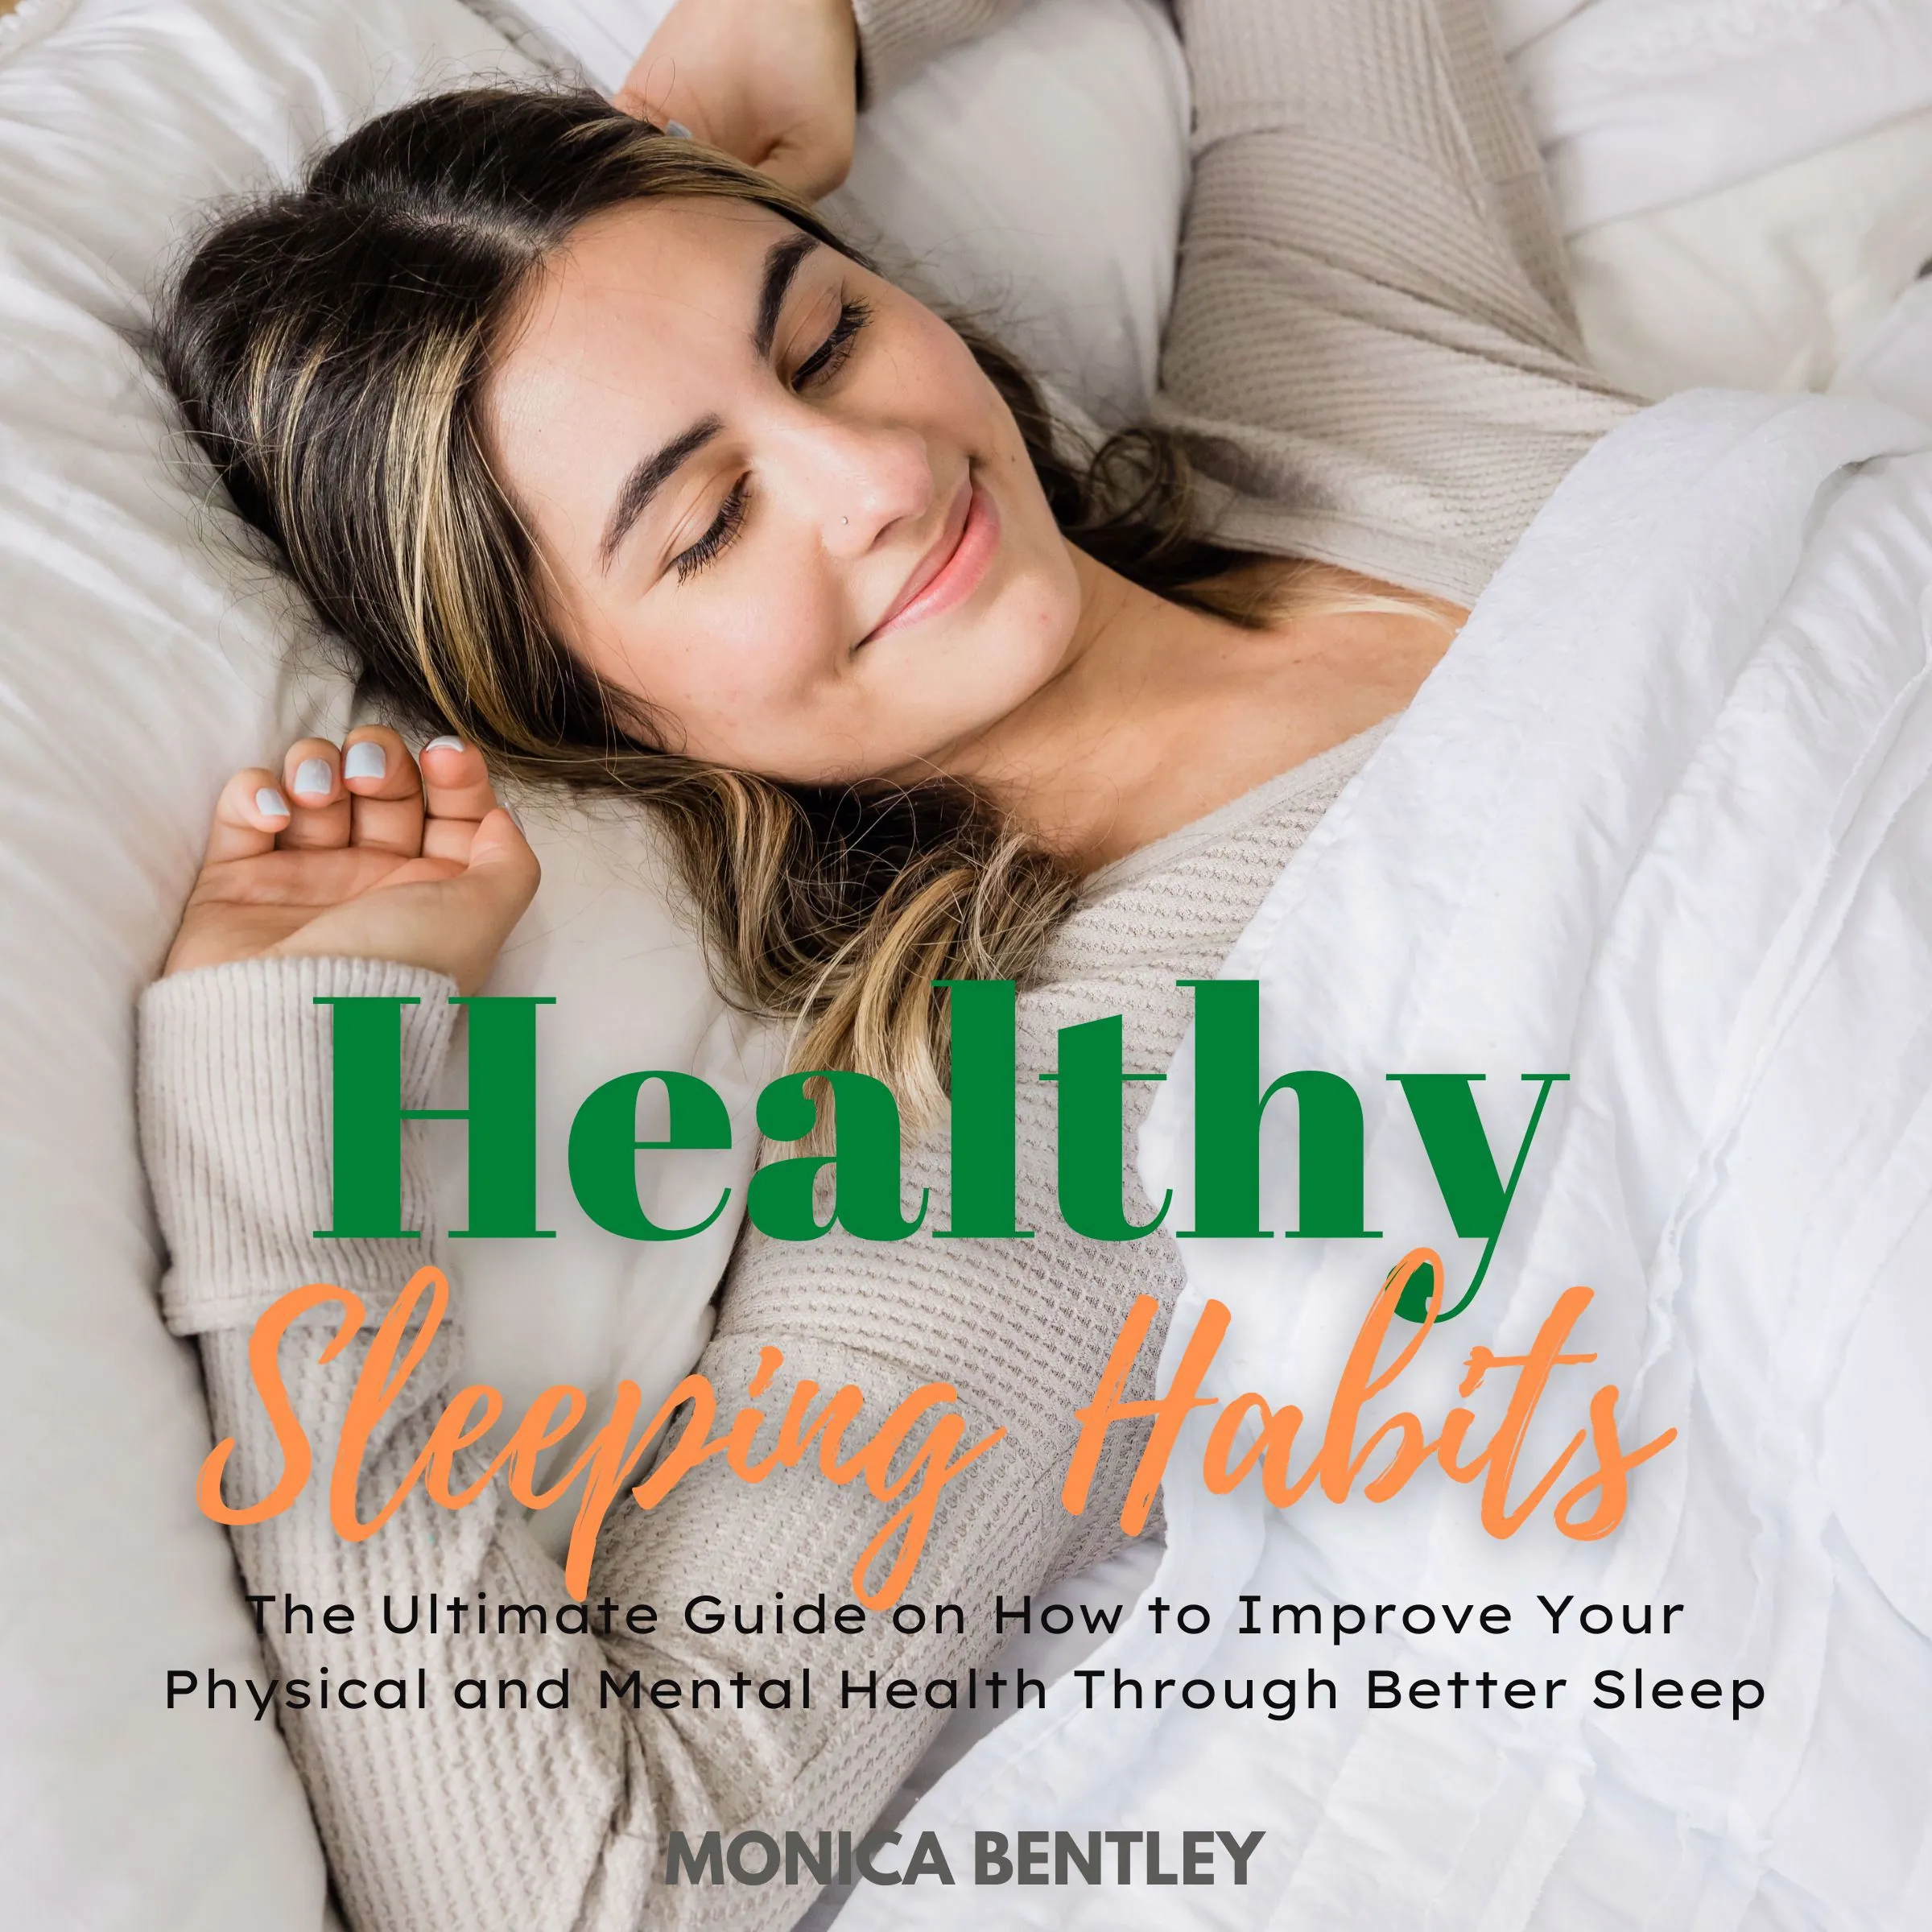 Healthy Sleeping Habits by Monica Bentley Audiobook